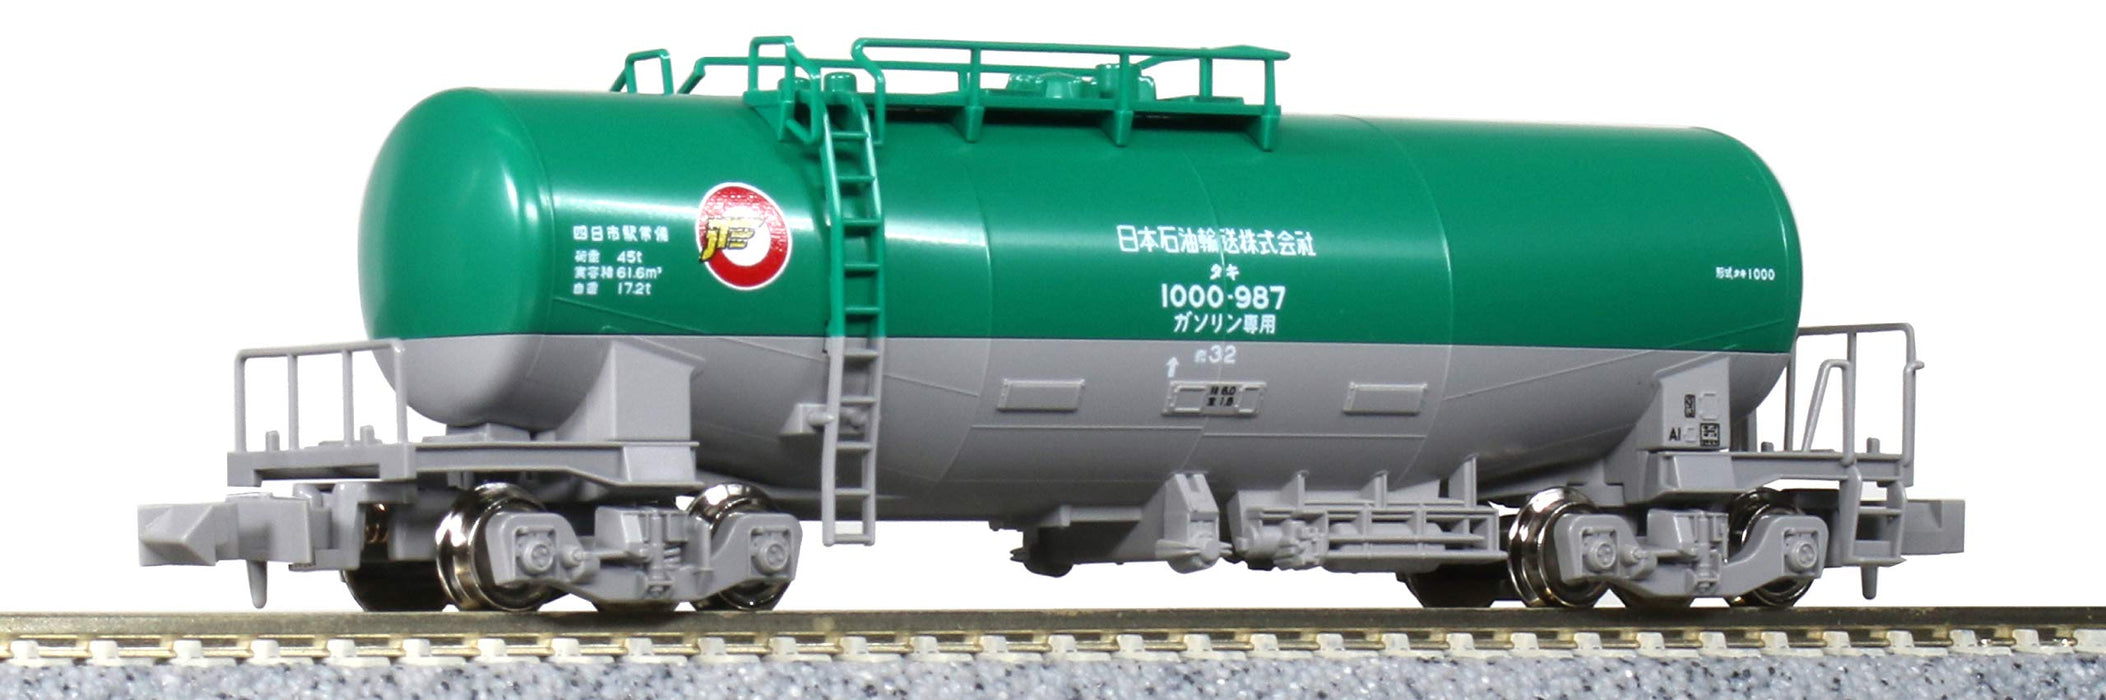 Kato N Gauge Taki 1000 Spät 8081 Nippon Öltransport Eisenbahn Güterwagen Modell